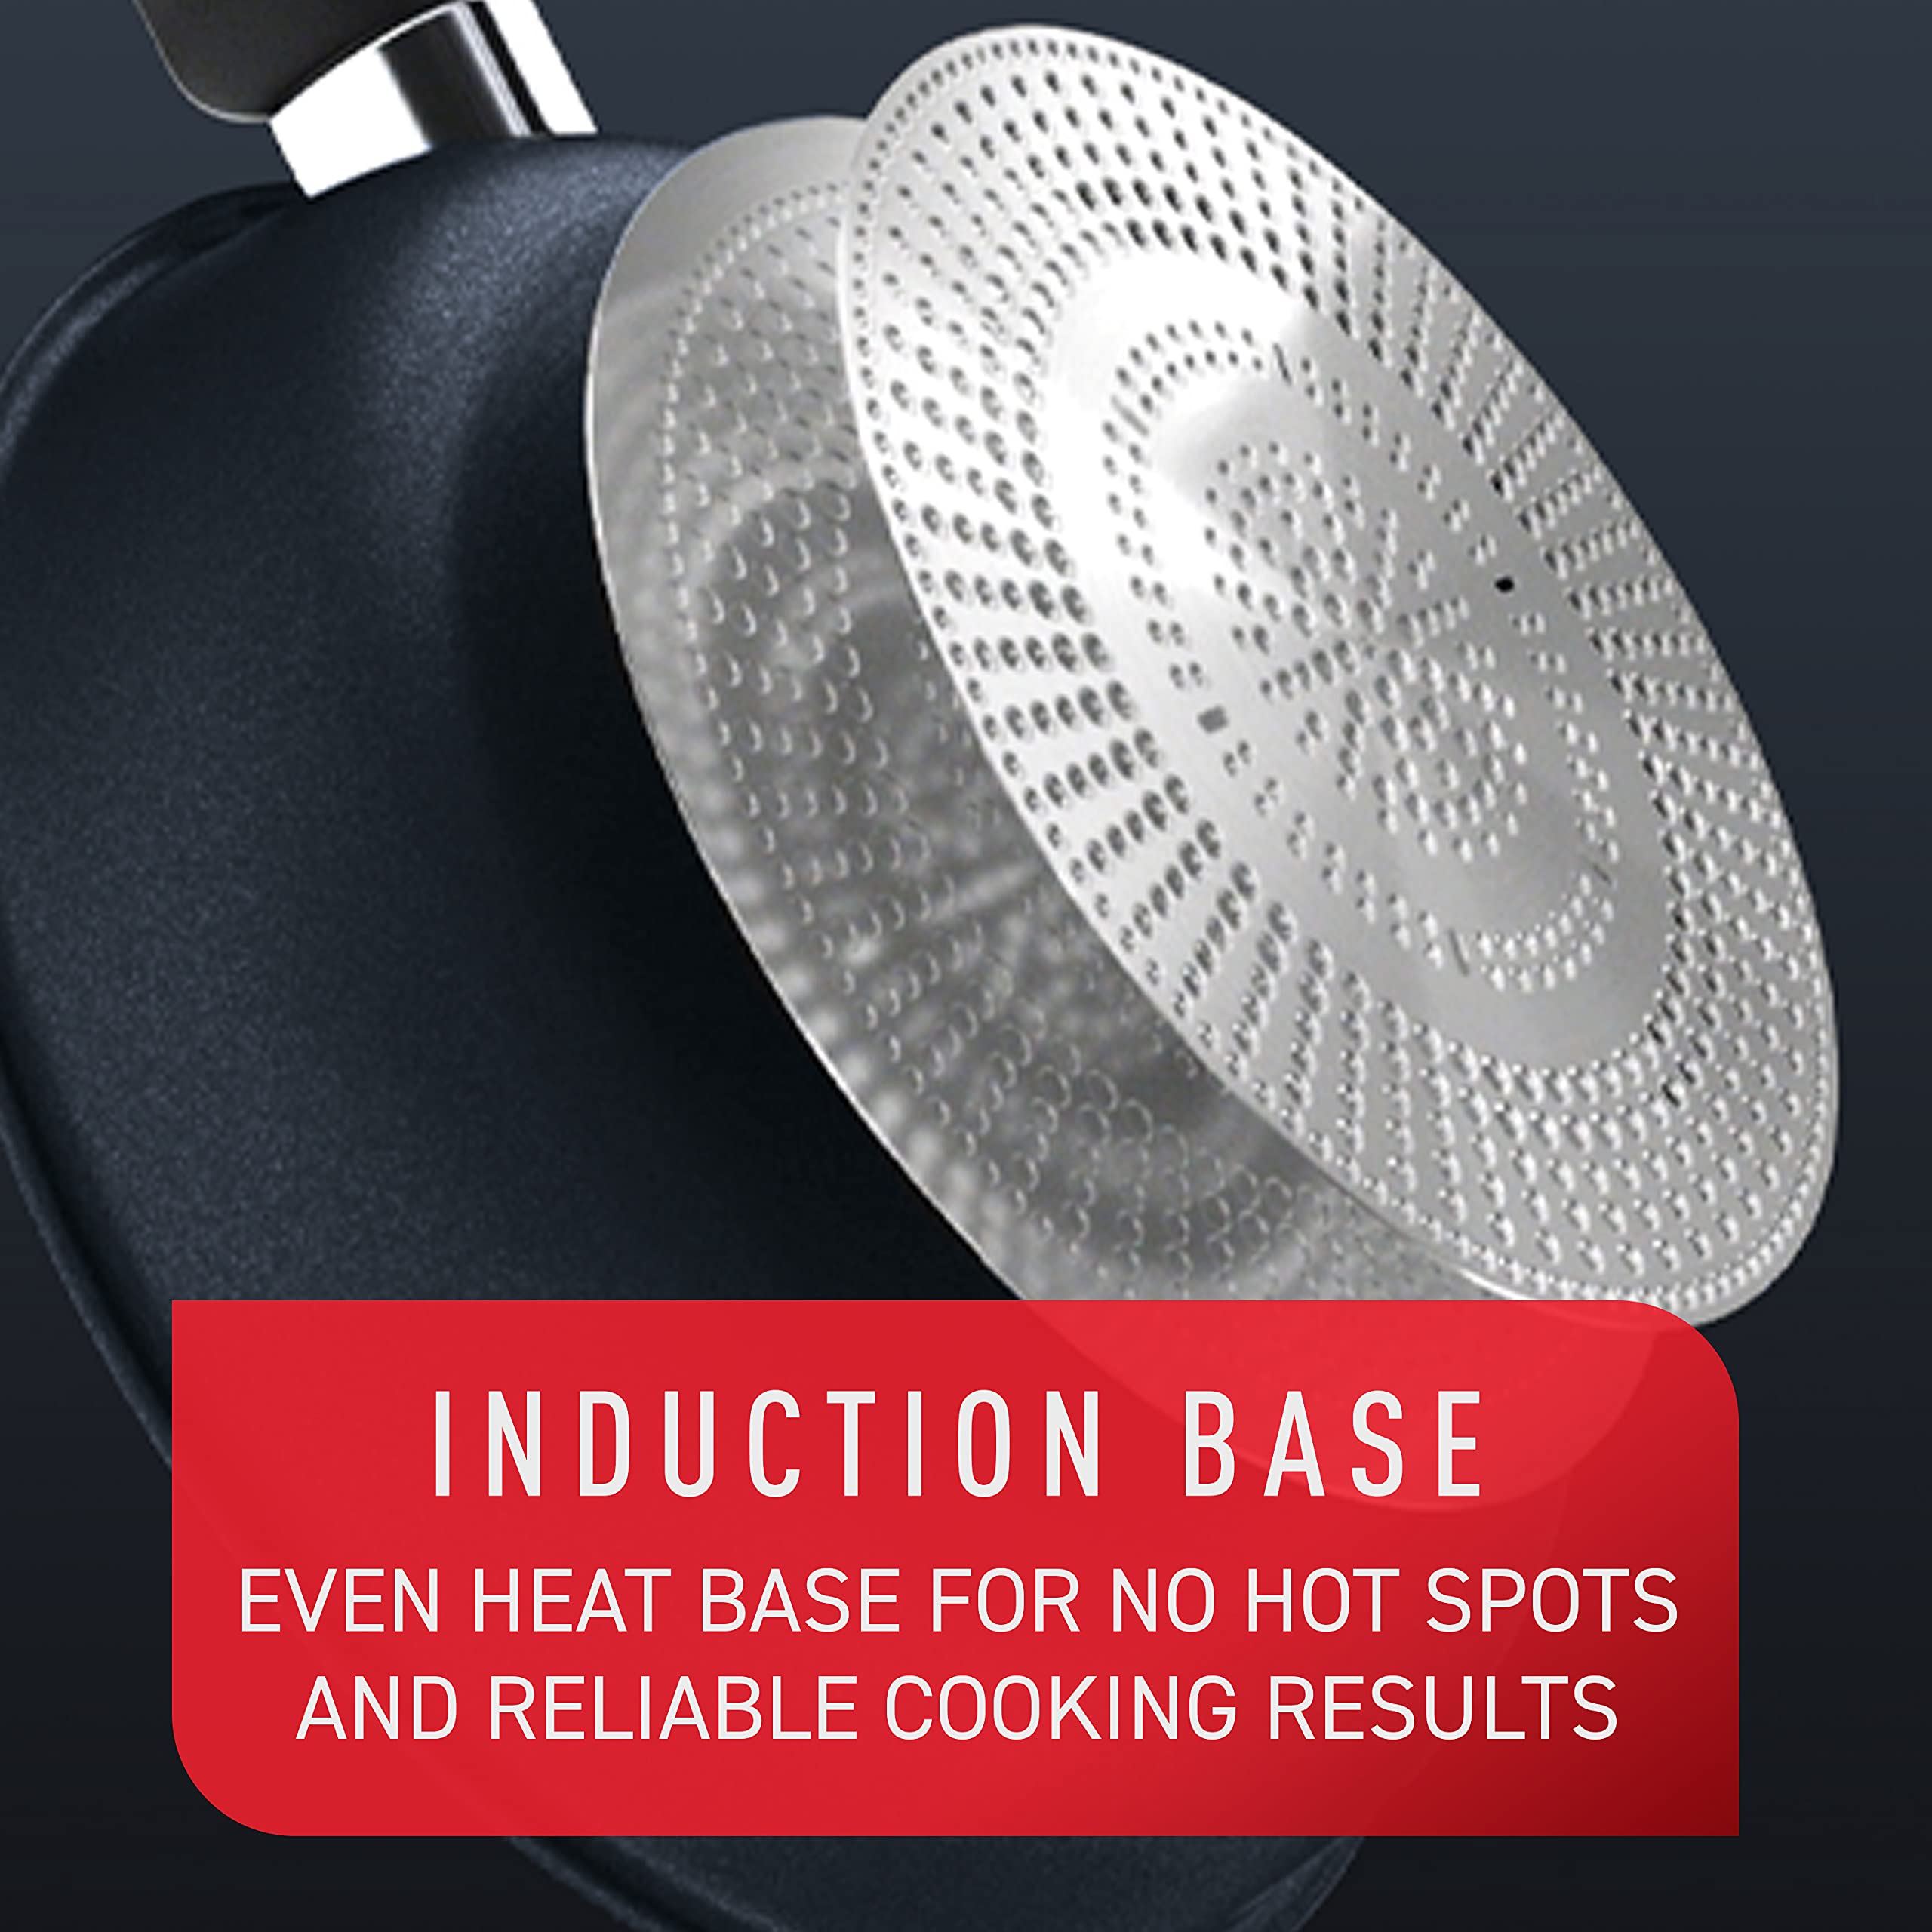 T-fal Platinum Nonstick Jumbo Cooker 5 Quart Induction Cookware, Pots and Pans, Dishwasher Safe Slate